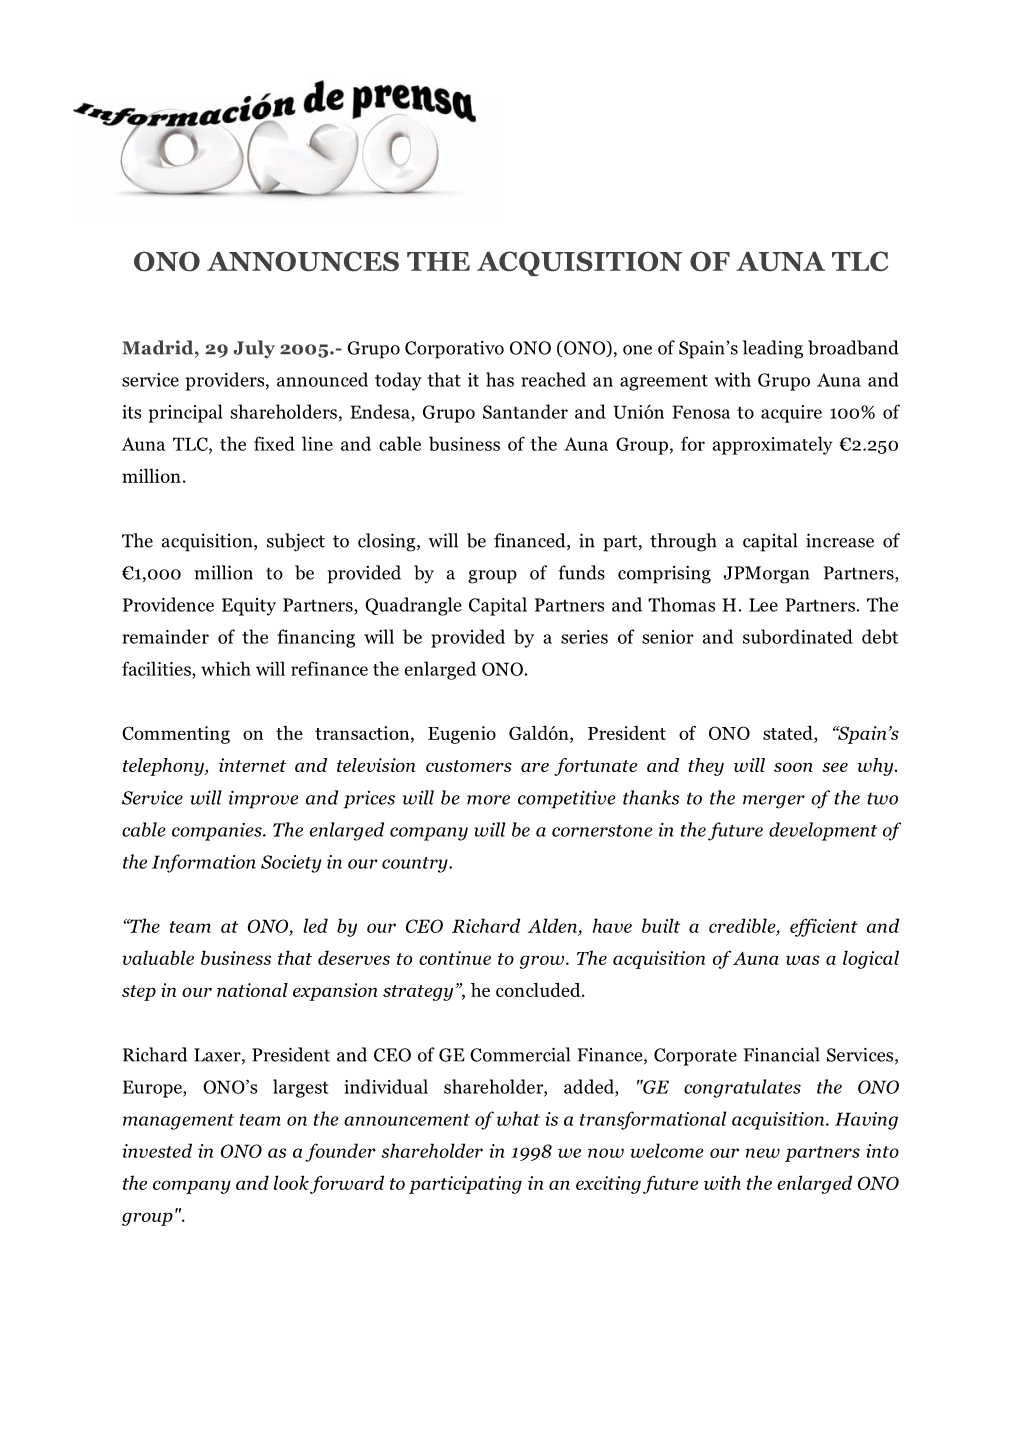 Ono Announces the Acquisition of Auna Tlc